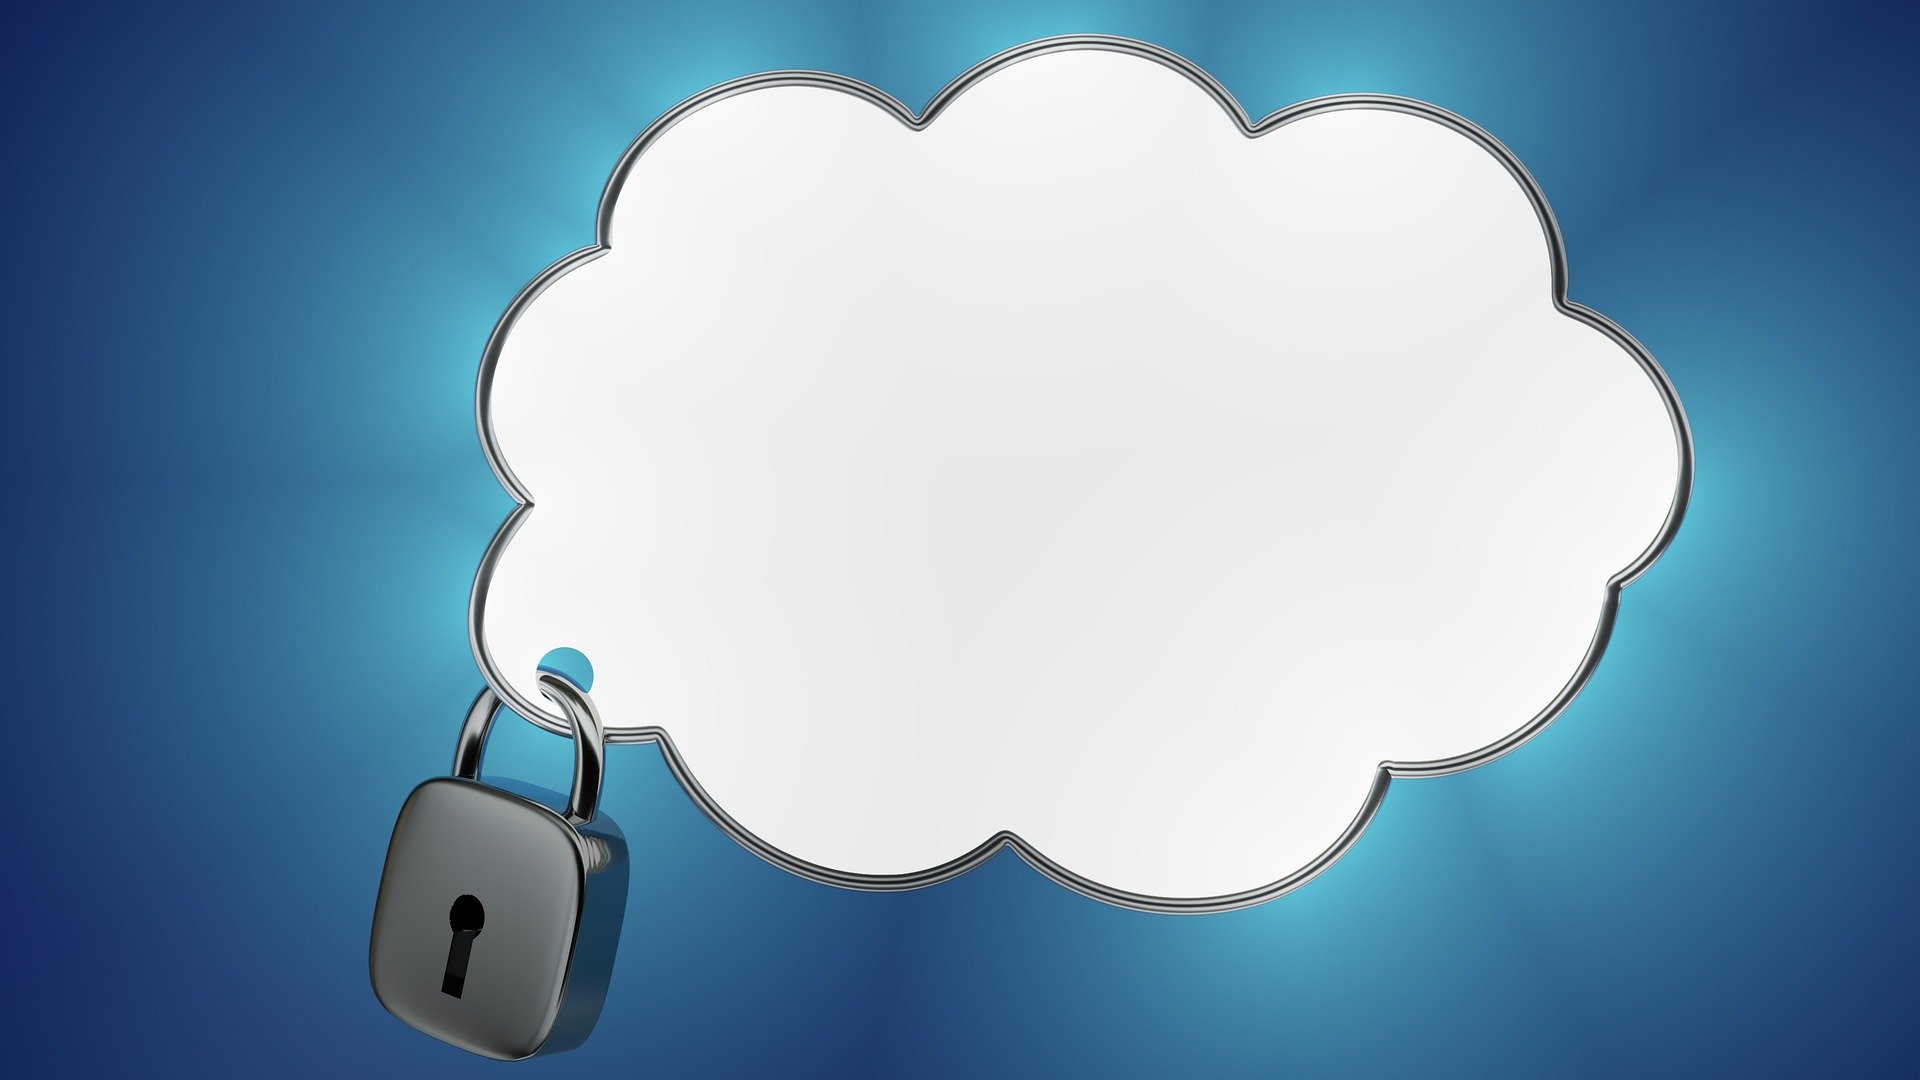 Cloud Storage and padlock